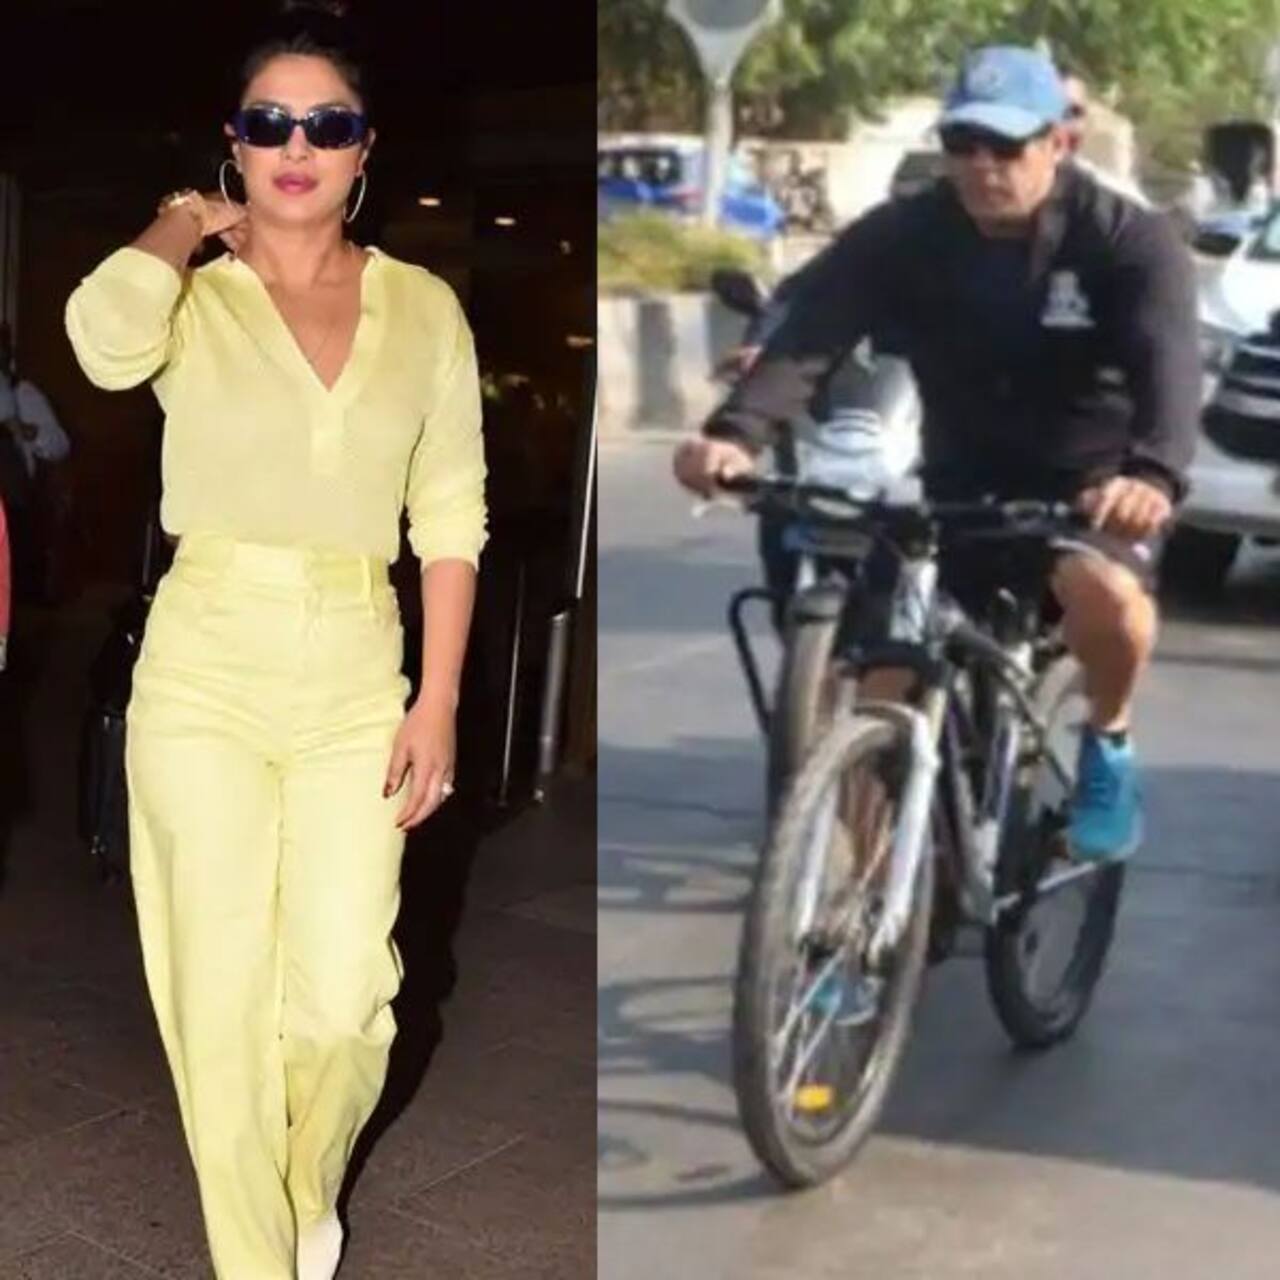 Pictures of Salman Khan taking a cycle ride and Priyanka Chopra flaunting her mangalsutra went viral this week